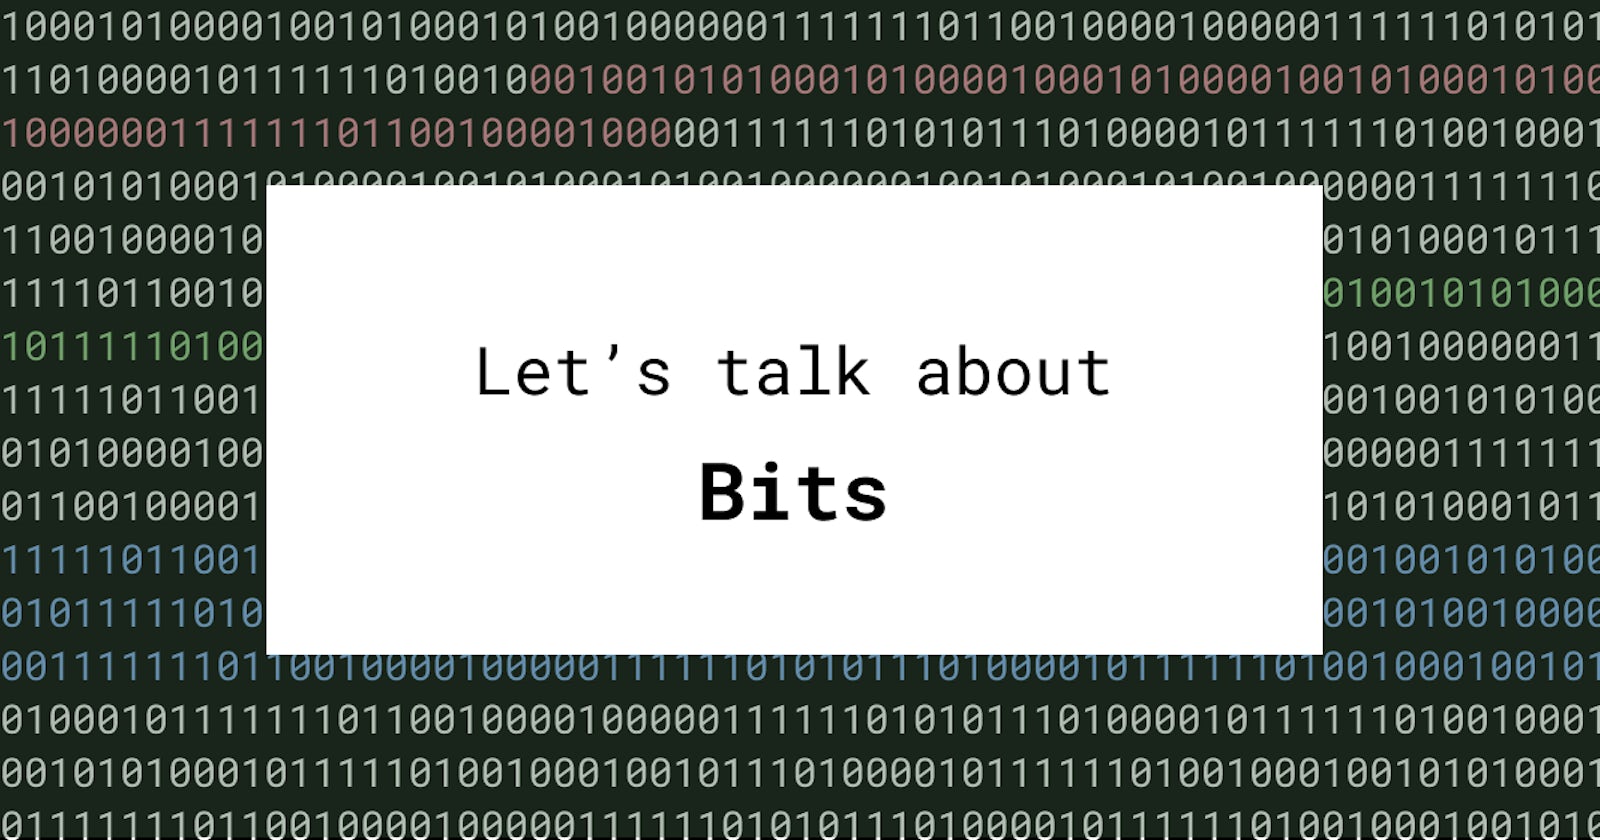 Let's talk about bits